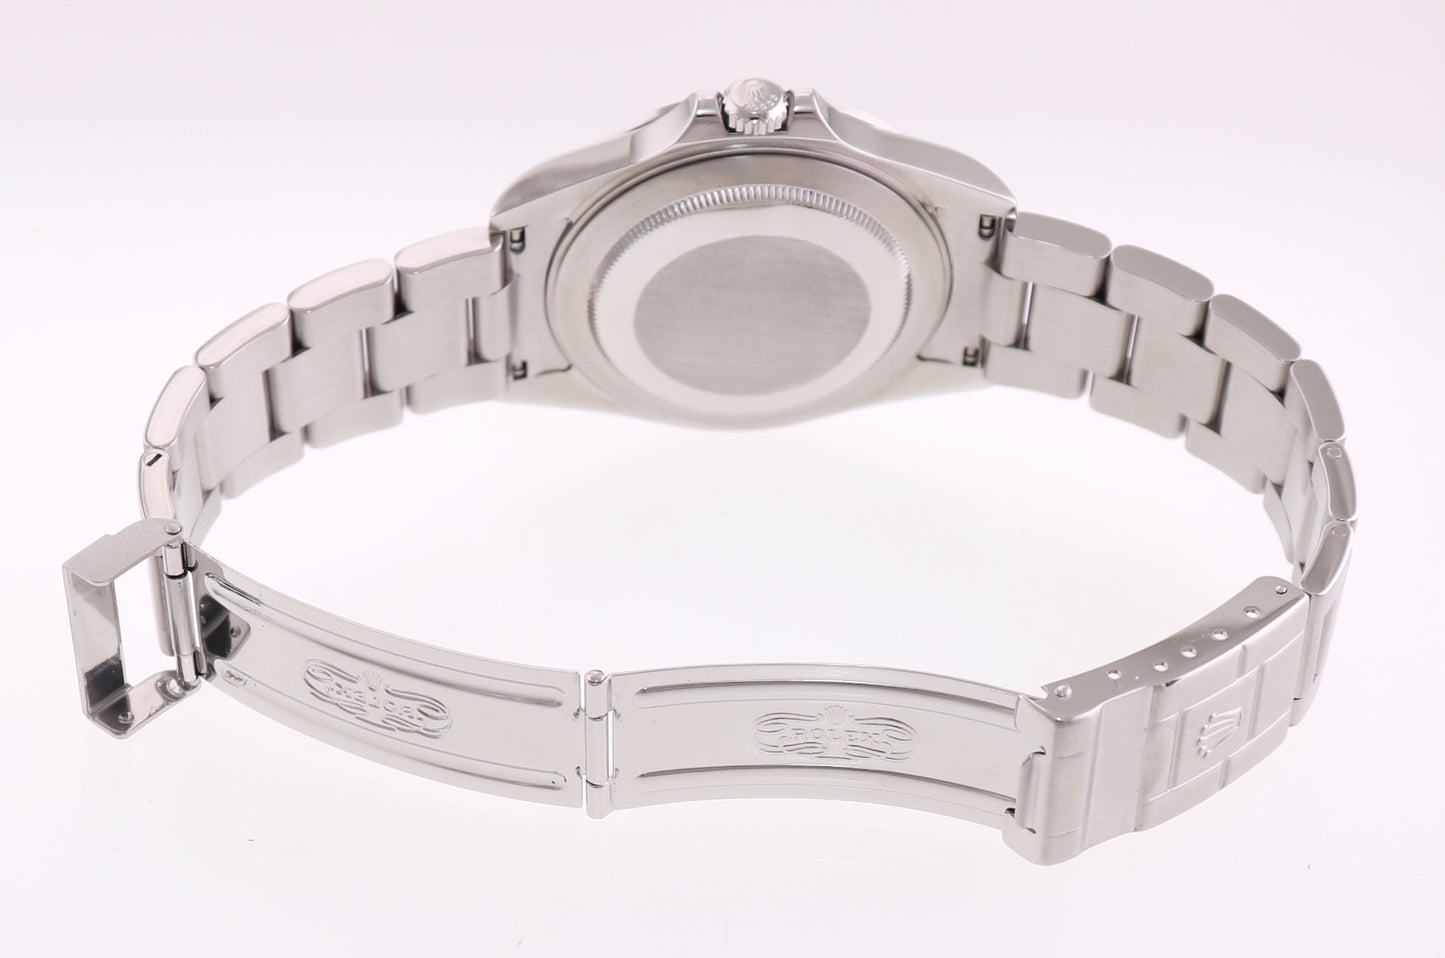 MINT 2004 Rolex Explorer II 16570 Stainless Steel Black Date GMT 40mm Watch Box